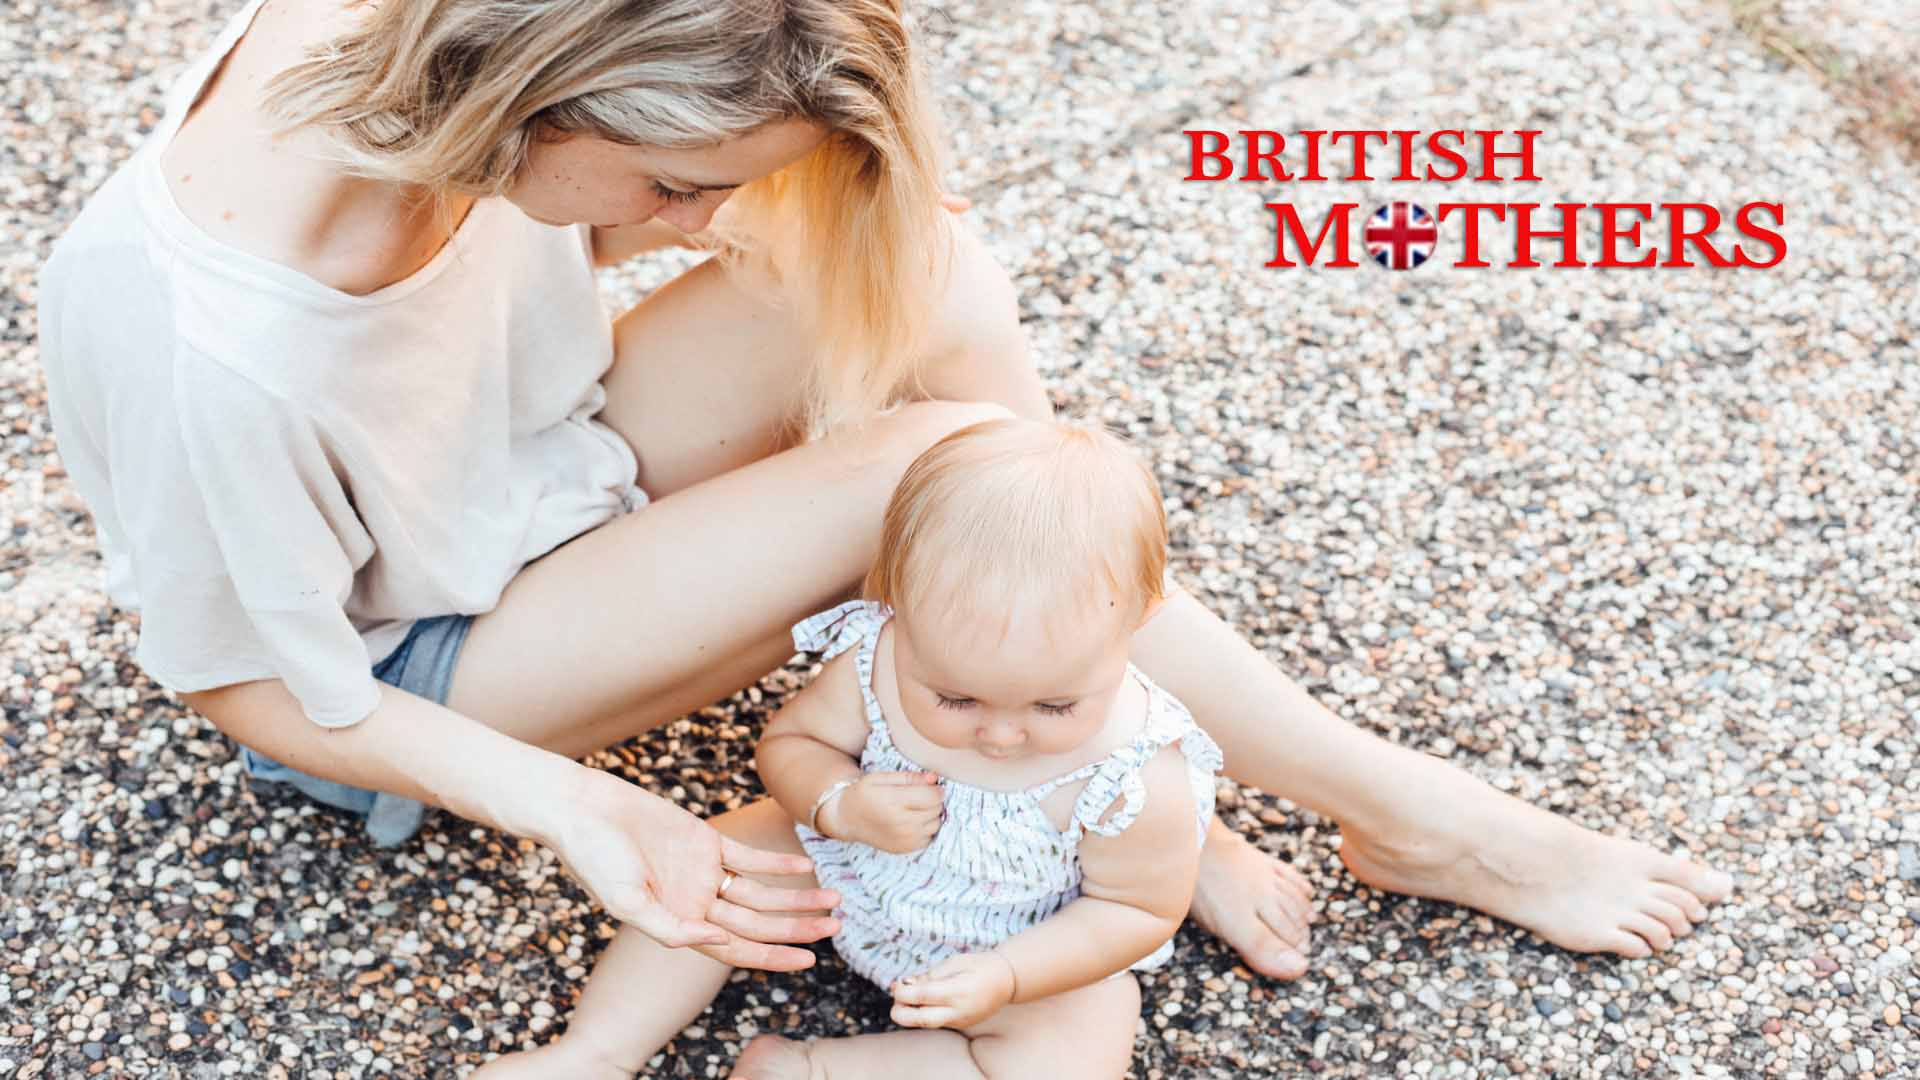 BRITISH MOTHERS